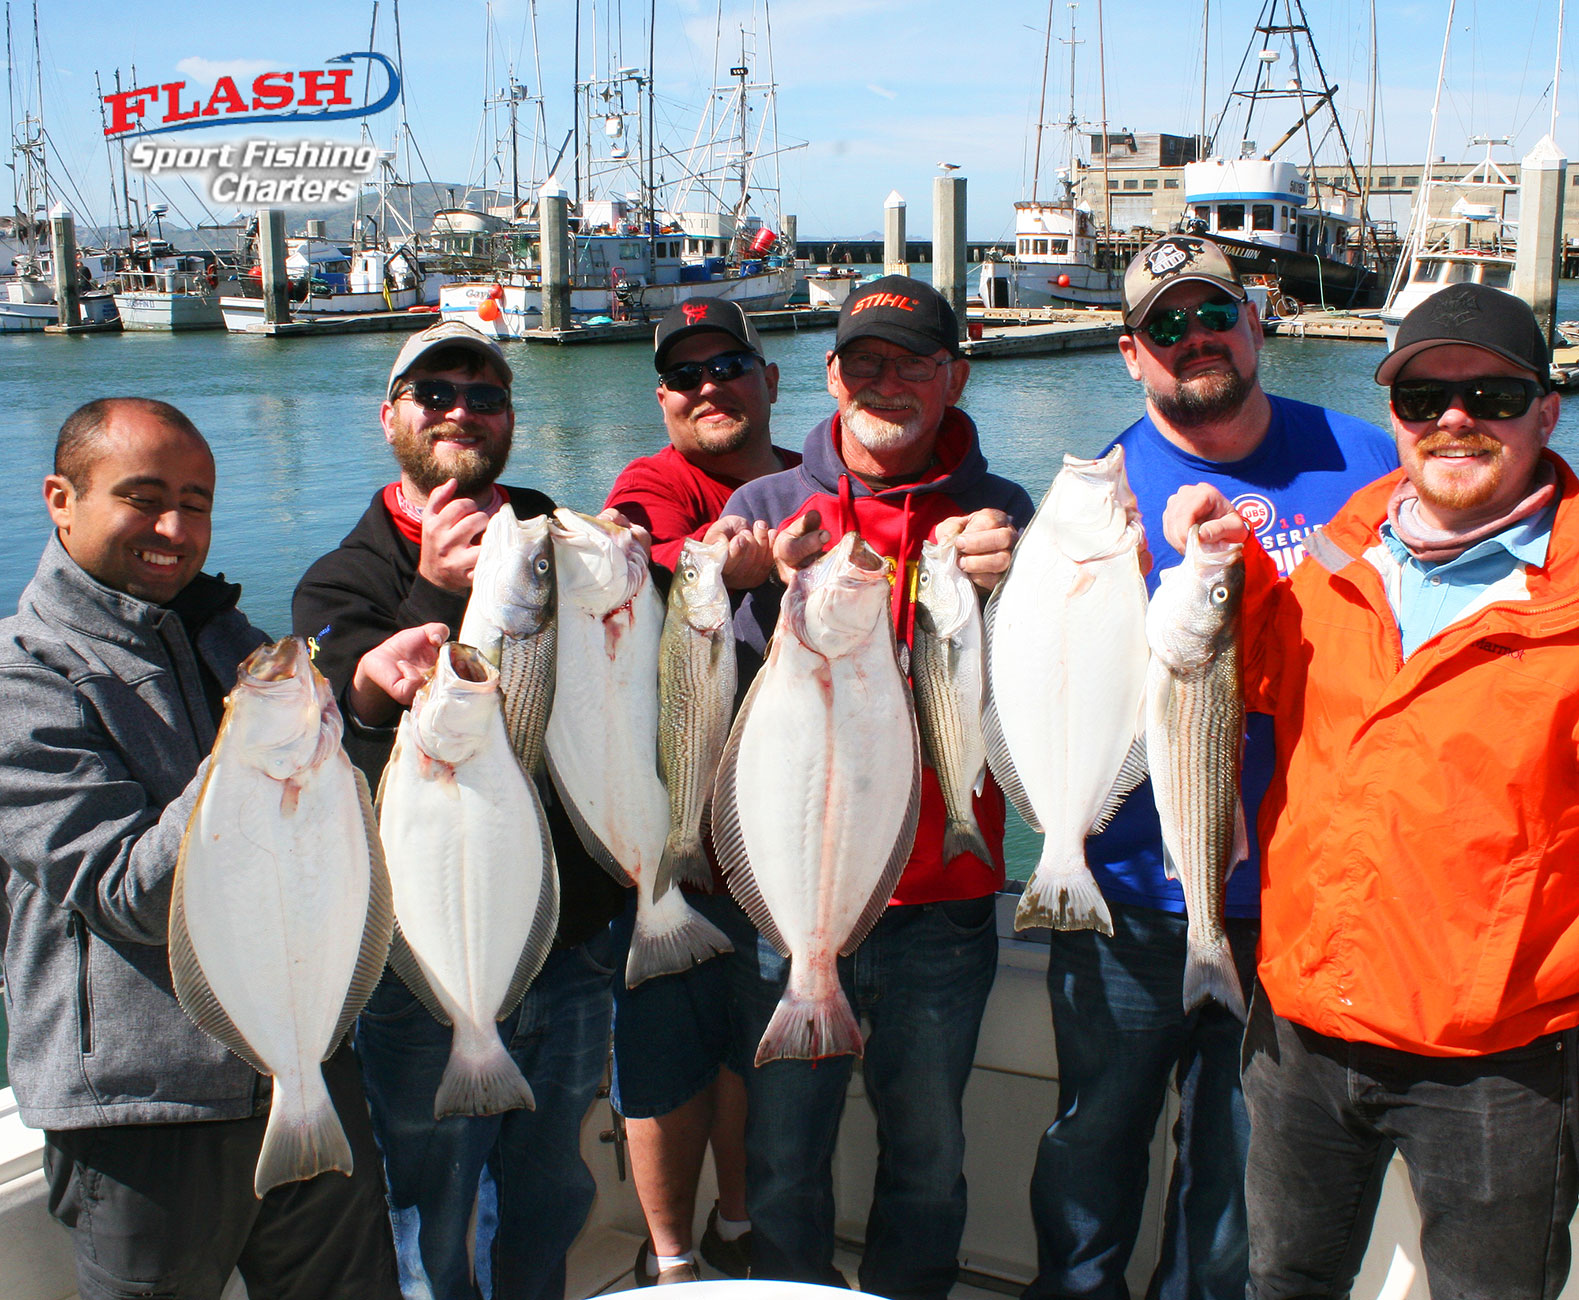 San Francisco Fishing Charter, report 5/10/18 Flash Sport Fishing